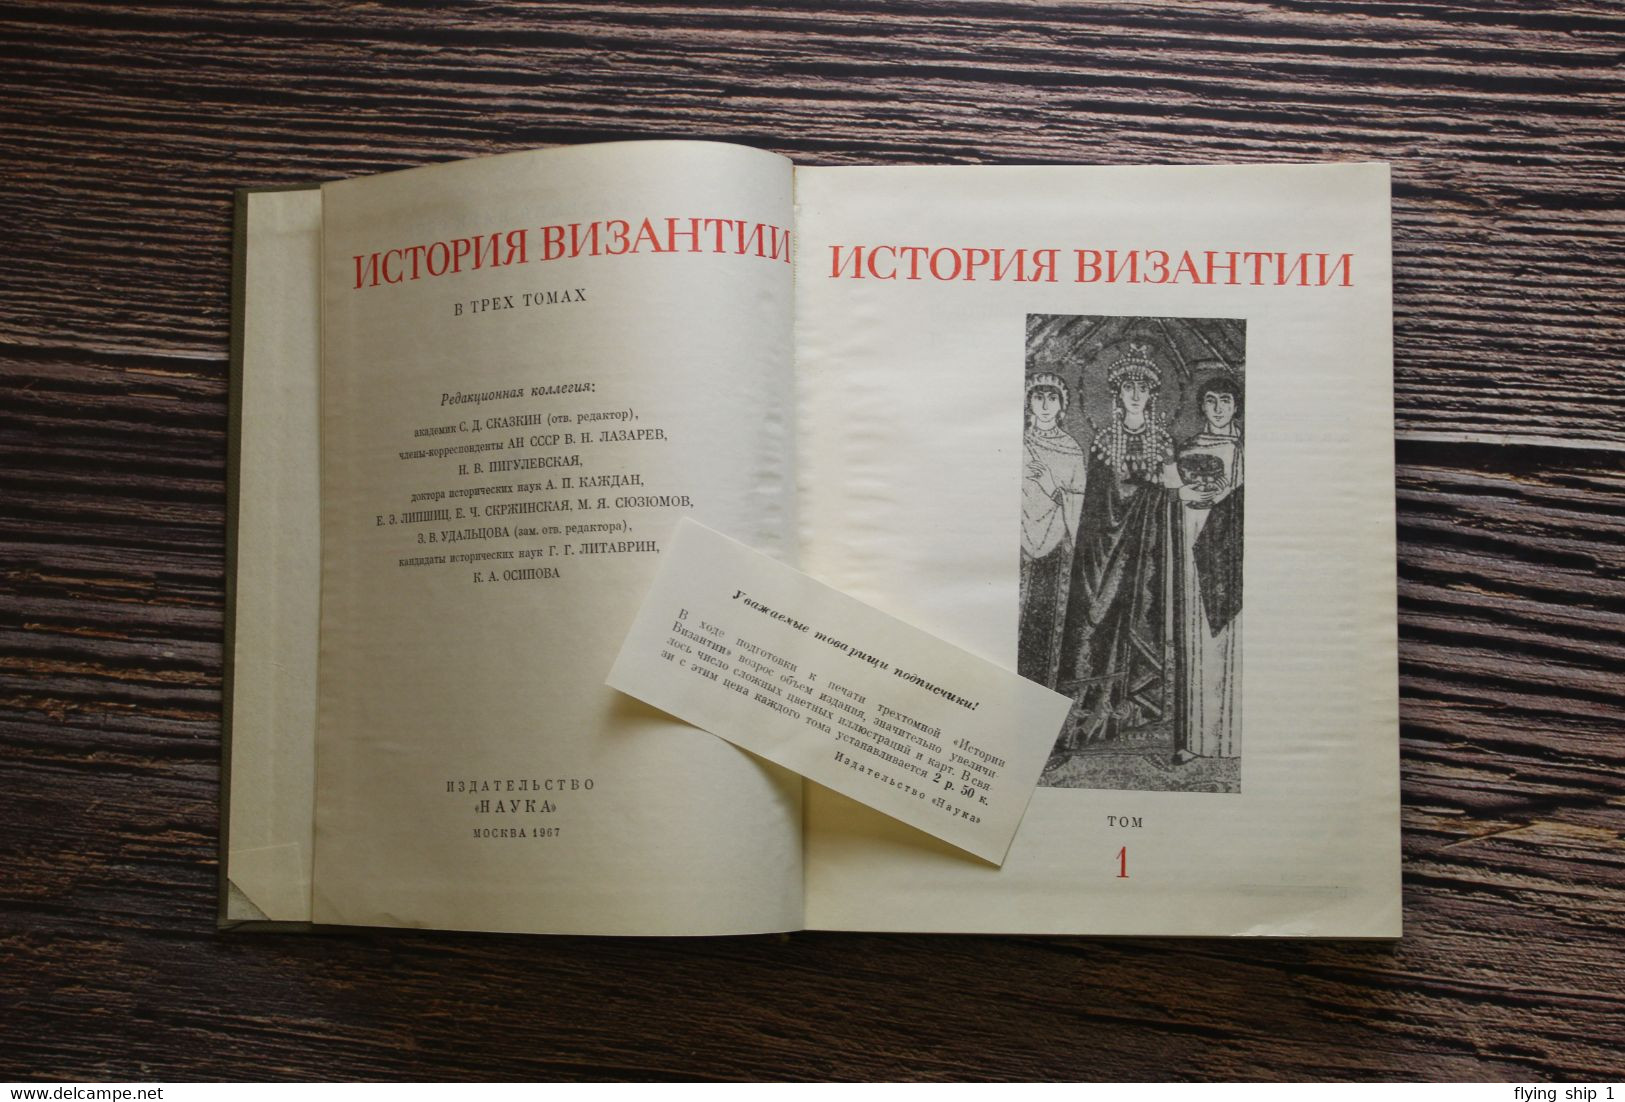 History of Byzantium. RARE! Full Set 3 Russian books Academy of Sciences USSR 1967 История ВИЗАНТИИ